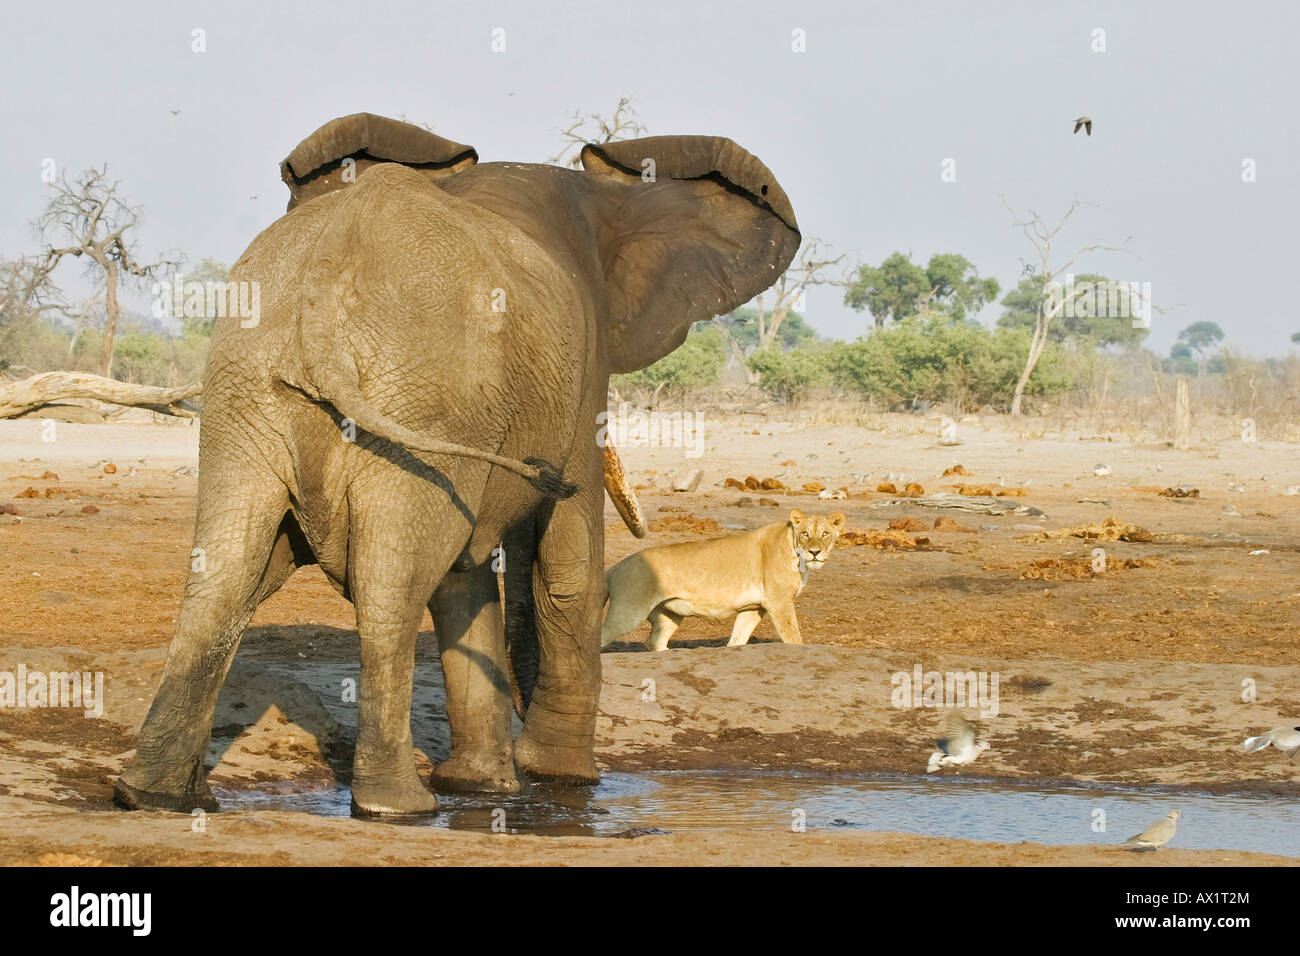 Elefante africano (Loxodonta africana) ataca un león (Panthera leo) en un abrevadero, Savuti, Parque Nacional de Chobe, Botswana, África Foto de stock